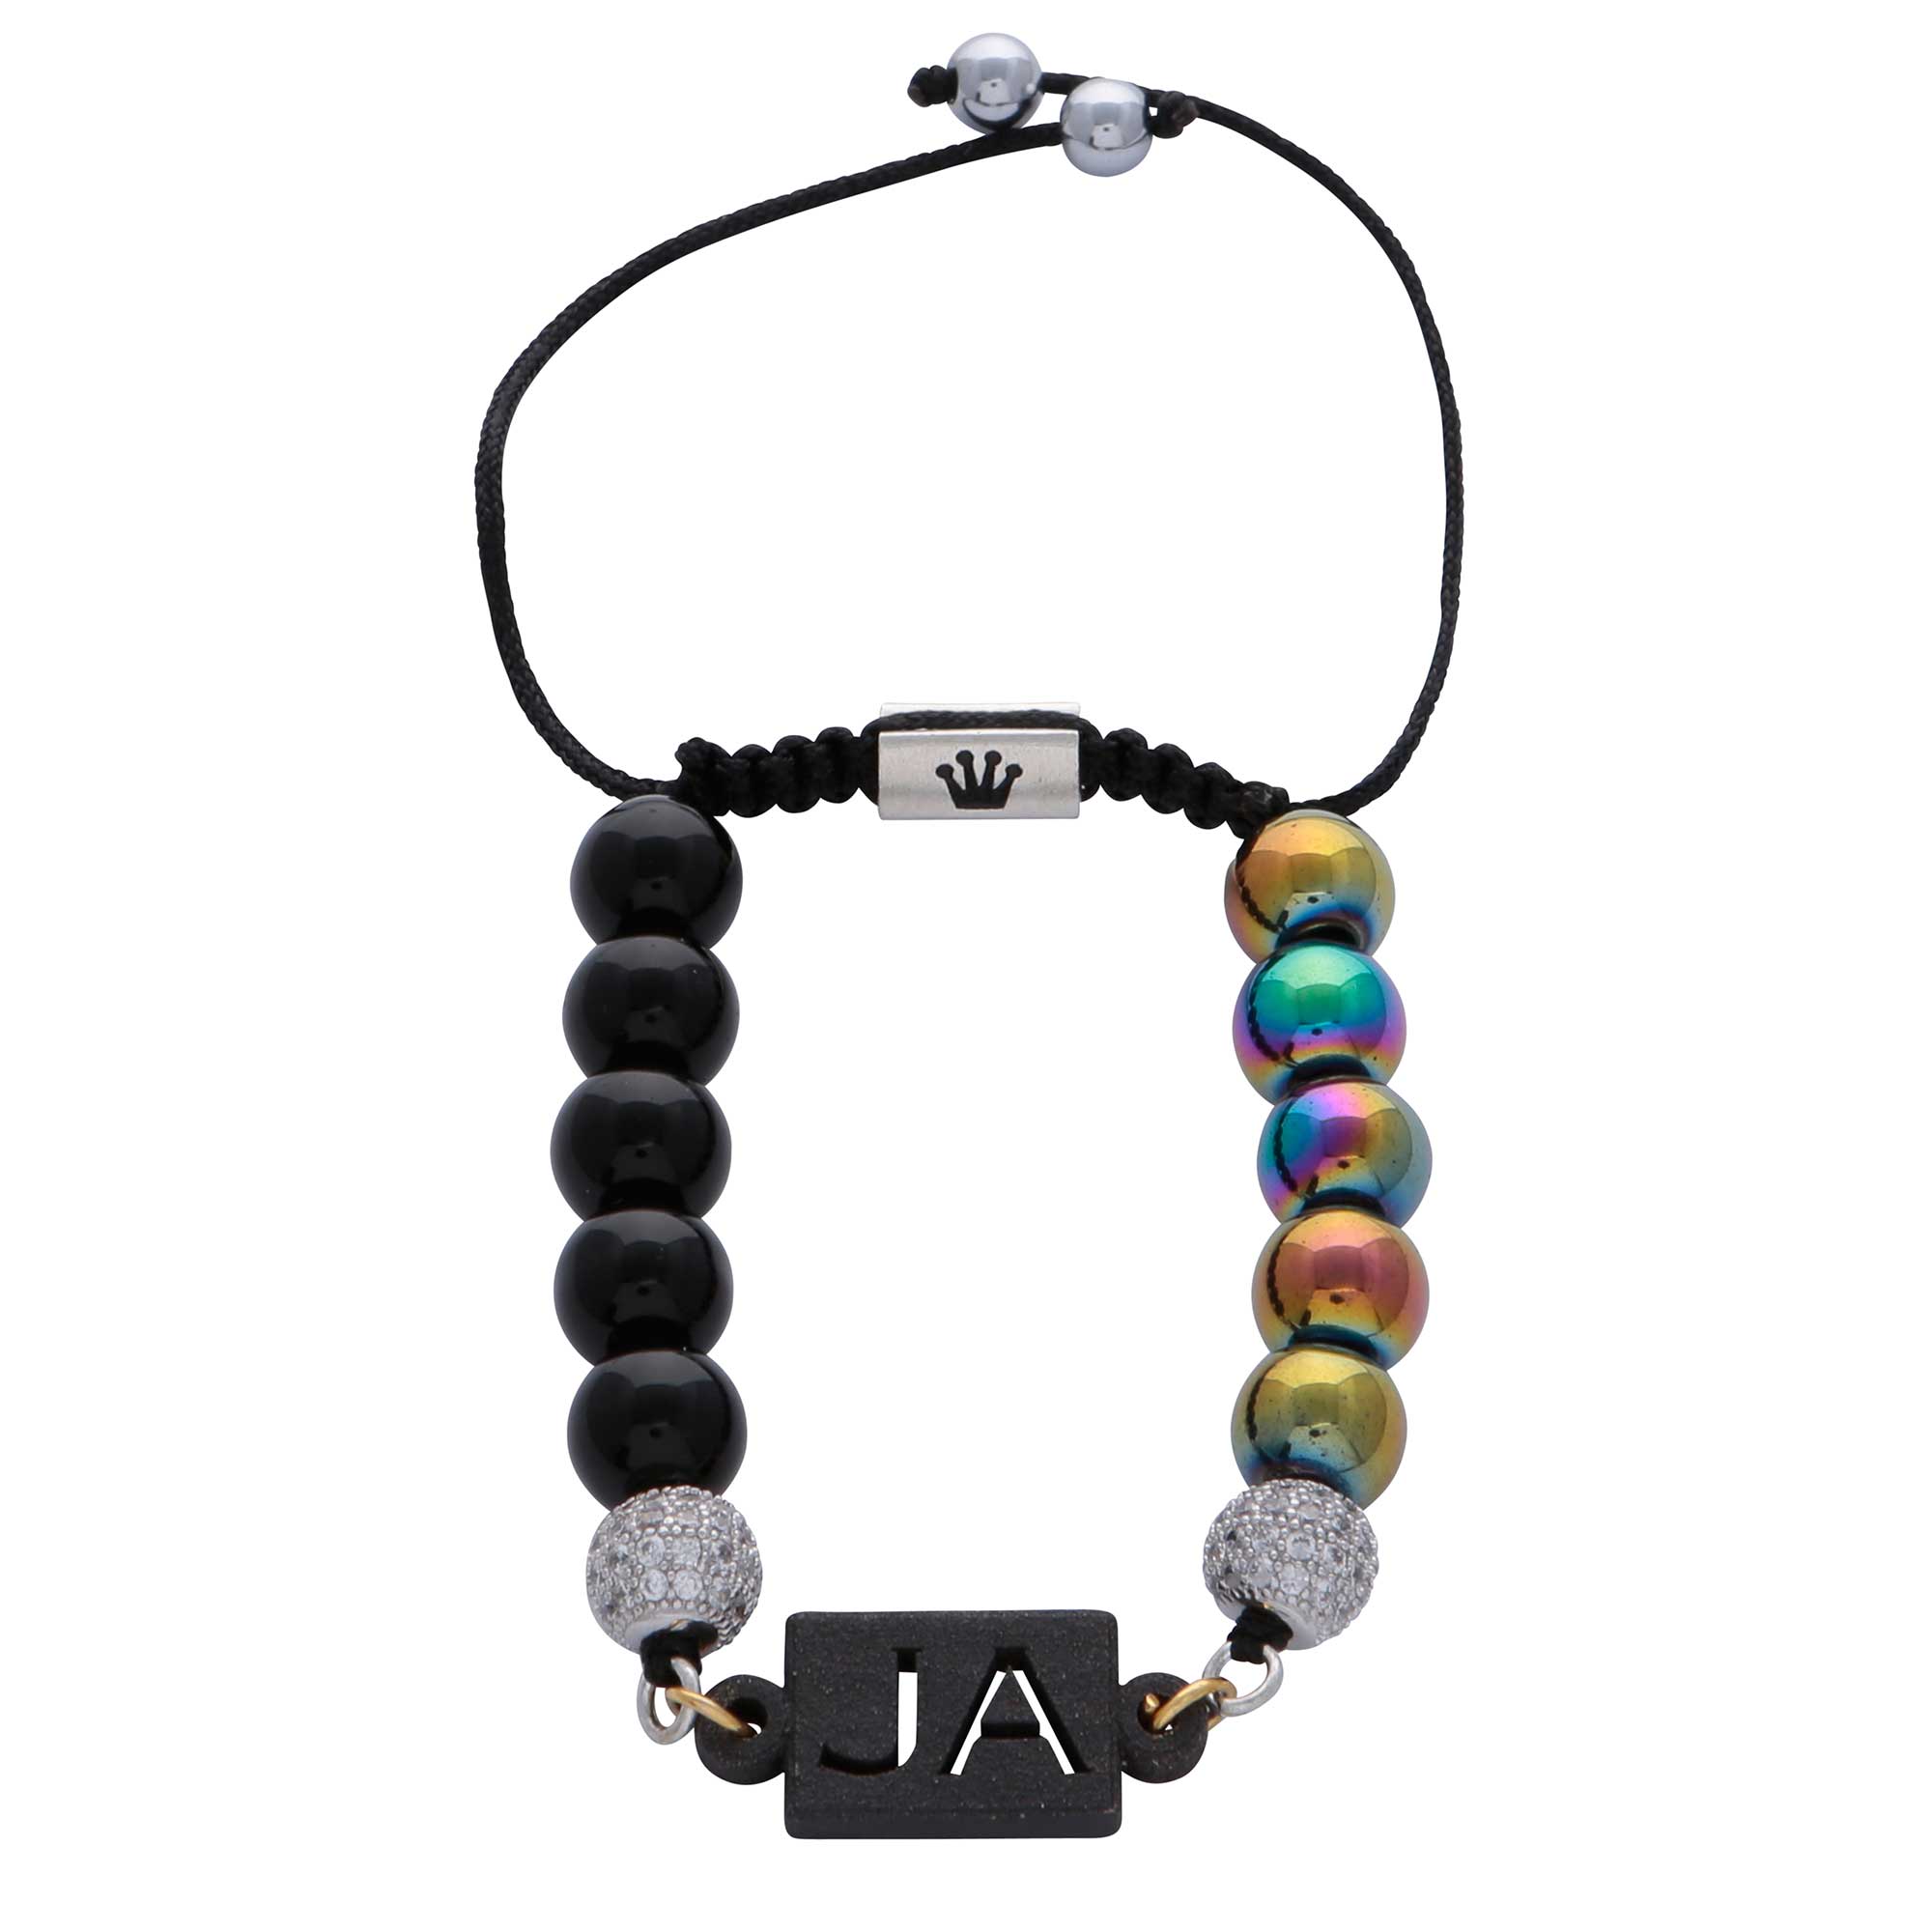 personalised-custom-initials-black-agate-natural-stone-beaded-rainbow-hematite-beads-bracelet-for-men-him